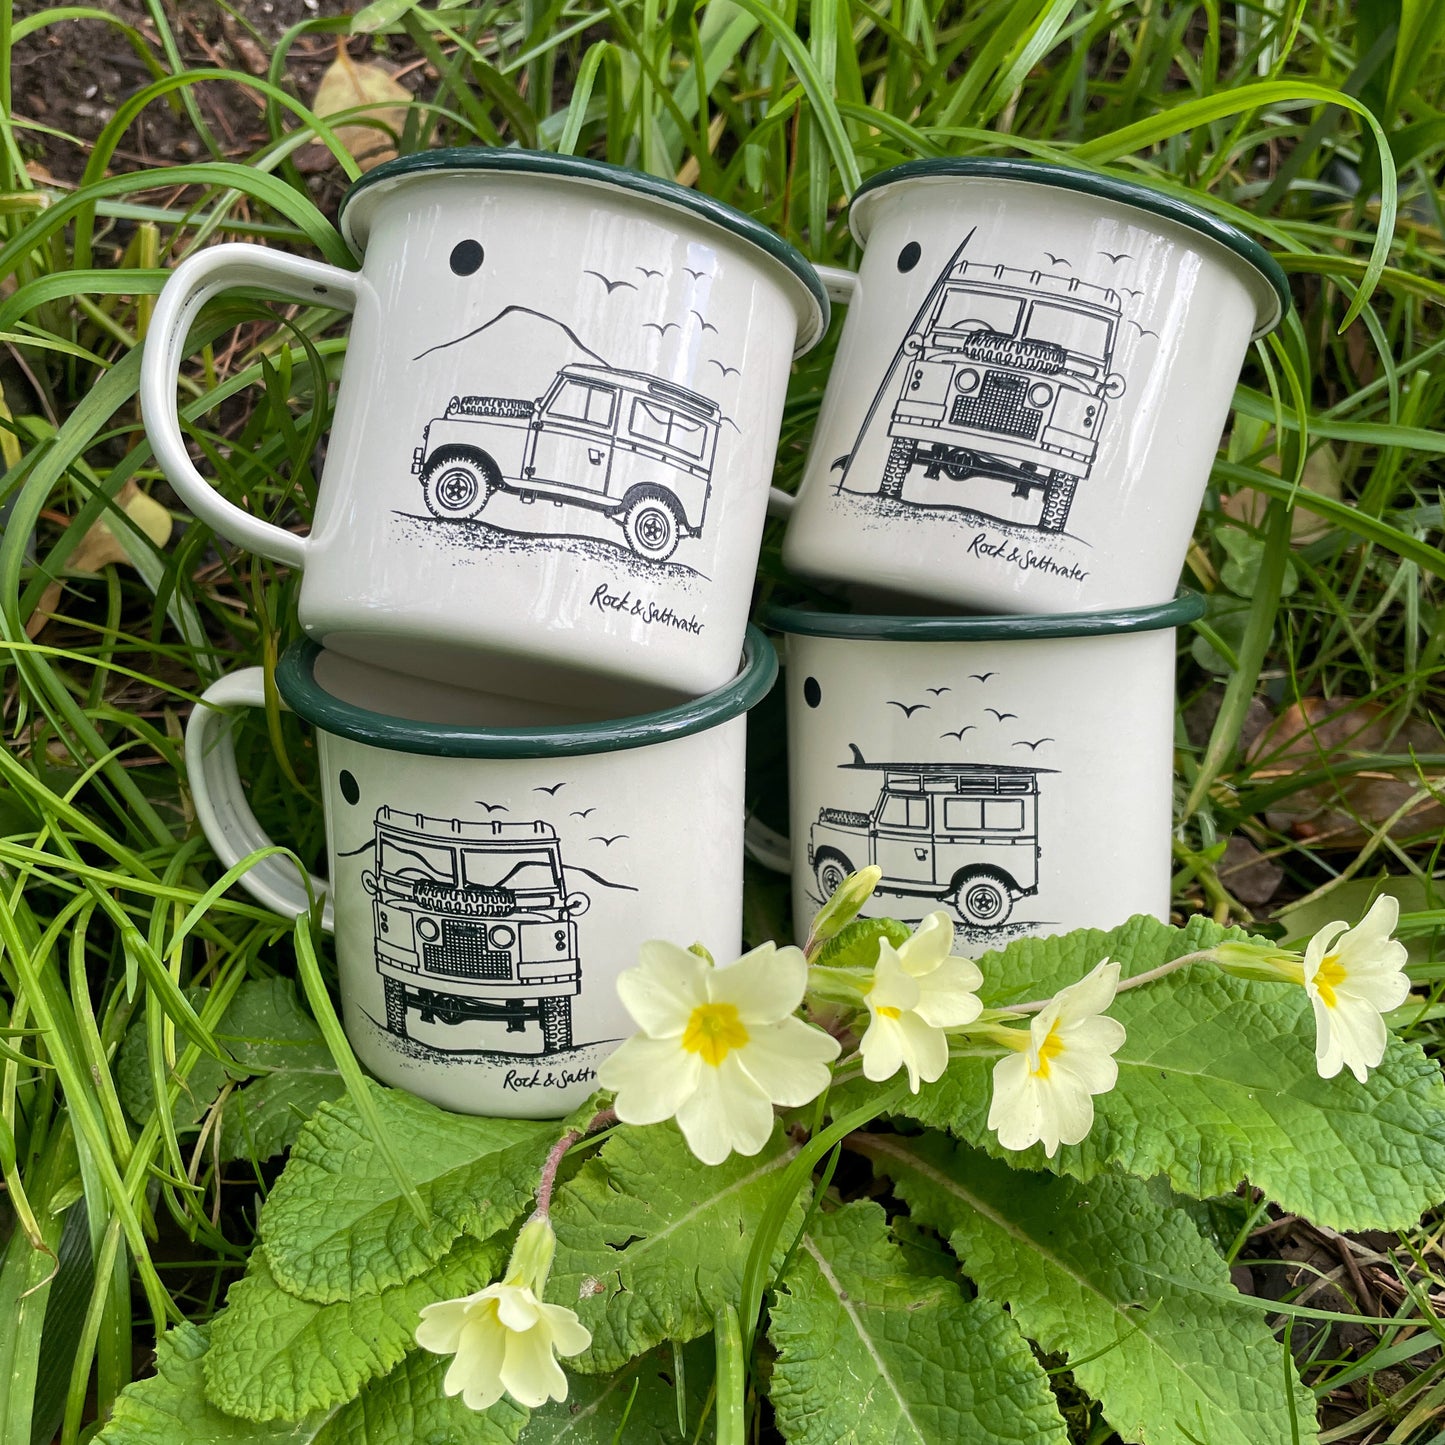 Slight seconds Land Rover enamel mugs